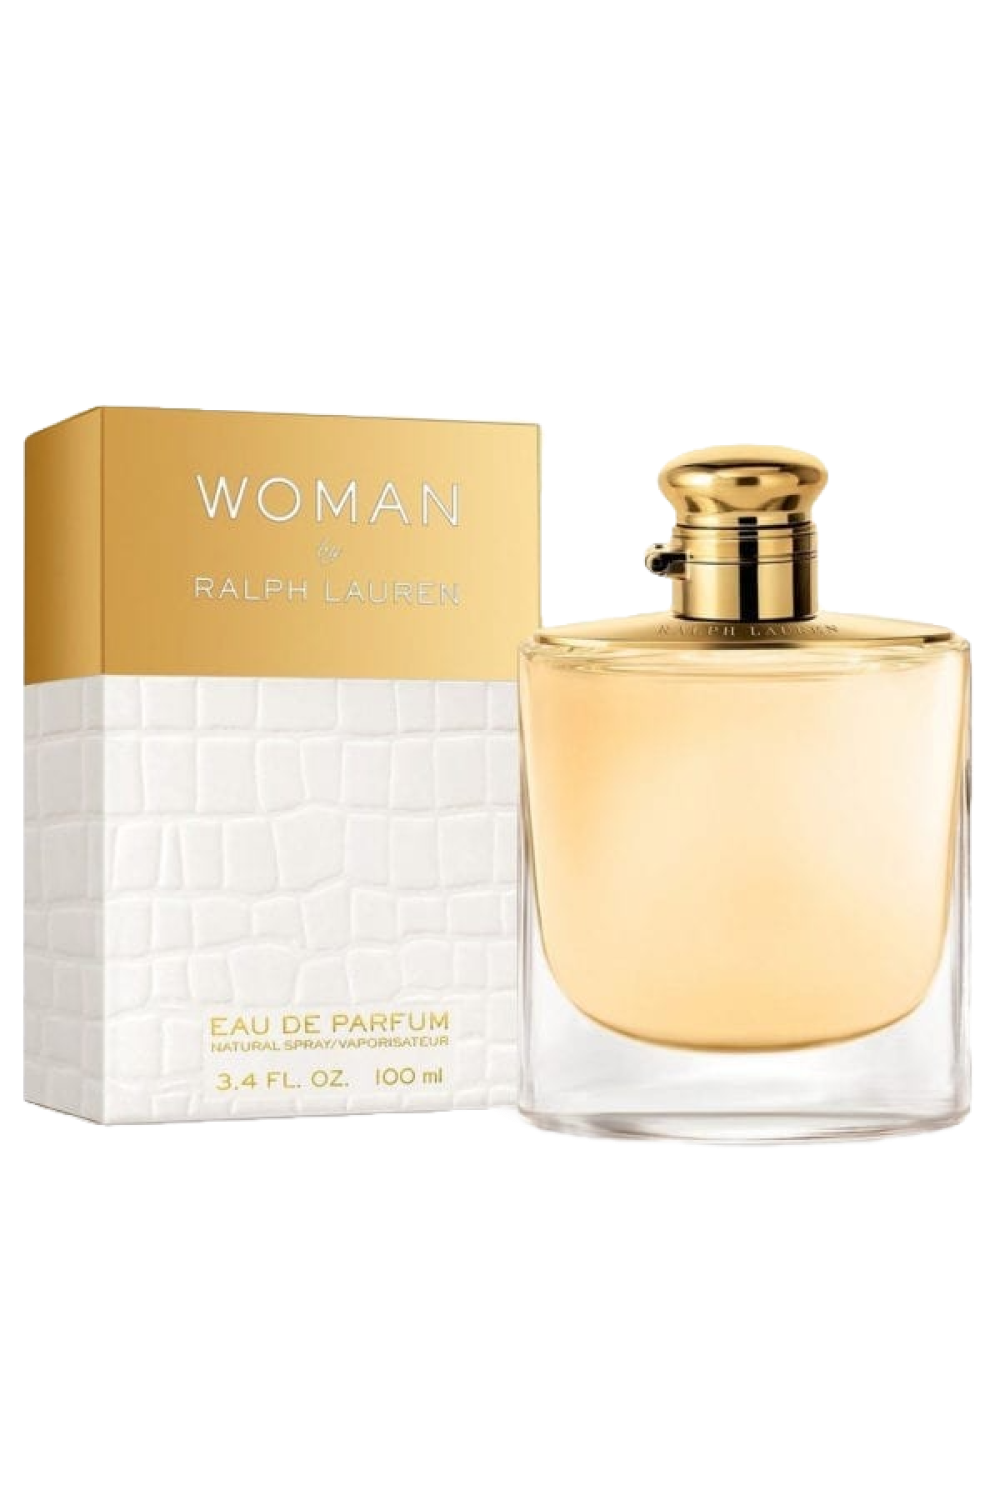 Comprar Perfume Feminino Woman by Ralph Lauren - 100ml - Eau de Parfum -  Importados, Perfumes, Bebidas, Doces e Salgados, Azeites, Aduana Dos  Pampas